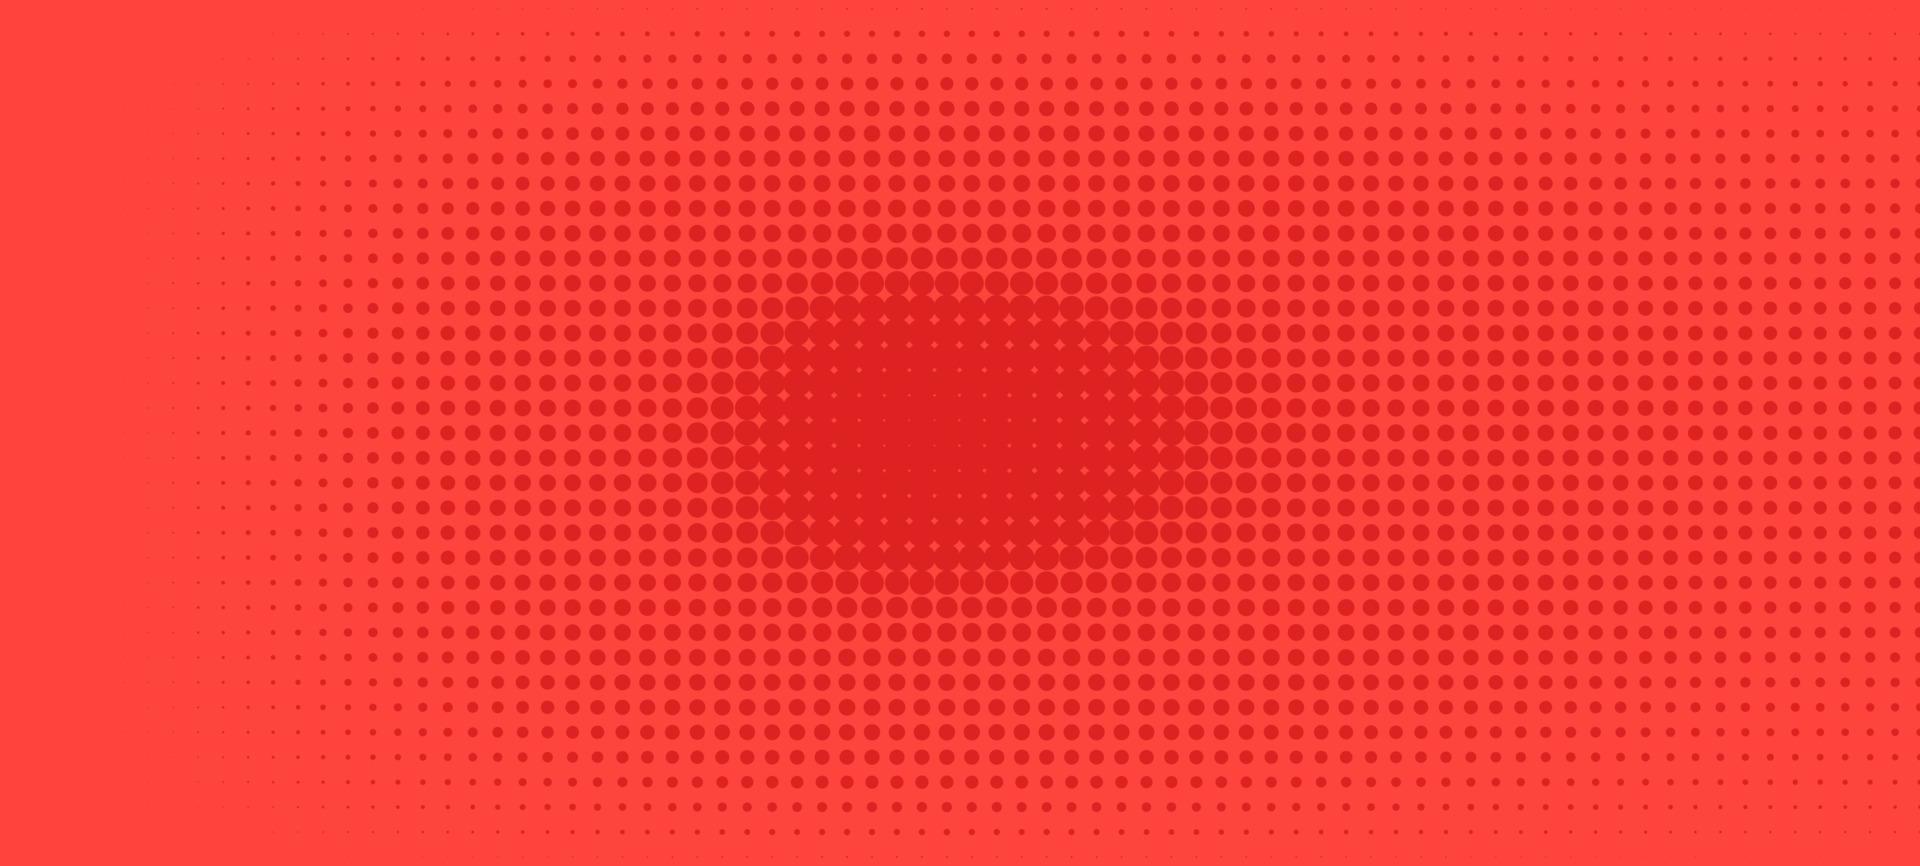 halftoon in abstracte stijl. geometrische retro banner vector textuur. moderne afdrukken. rode achtergrond. lichteffect